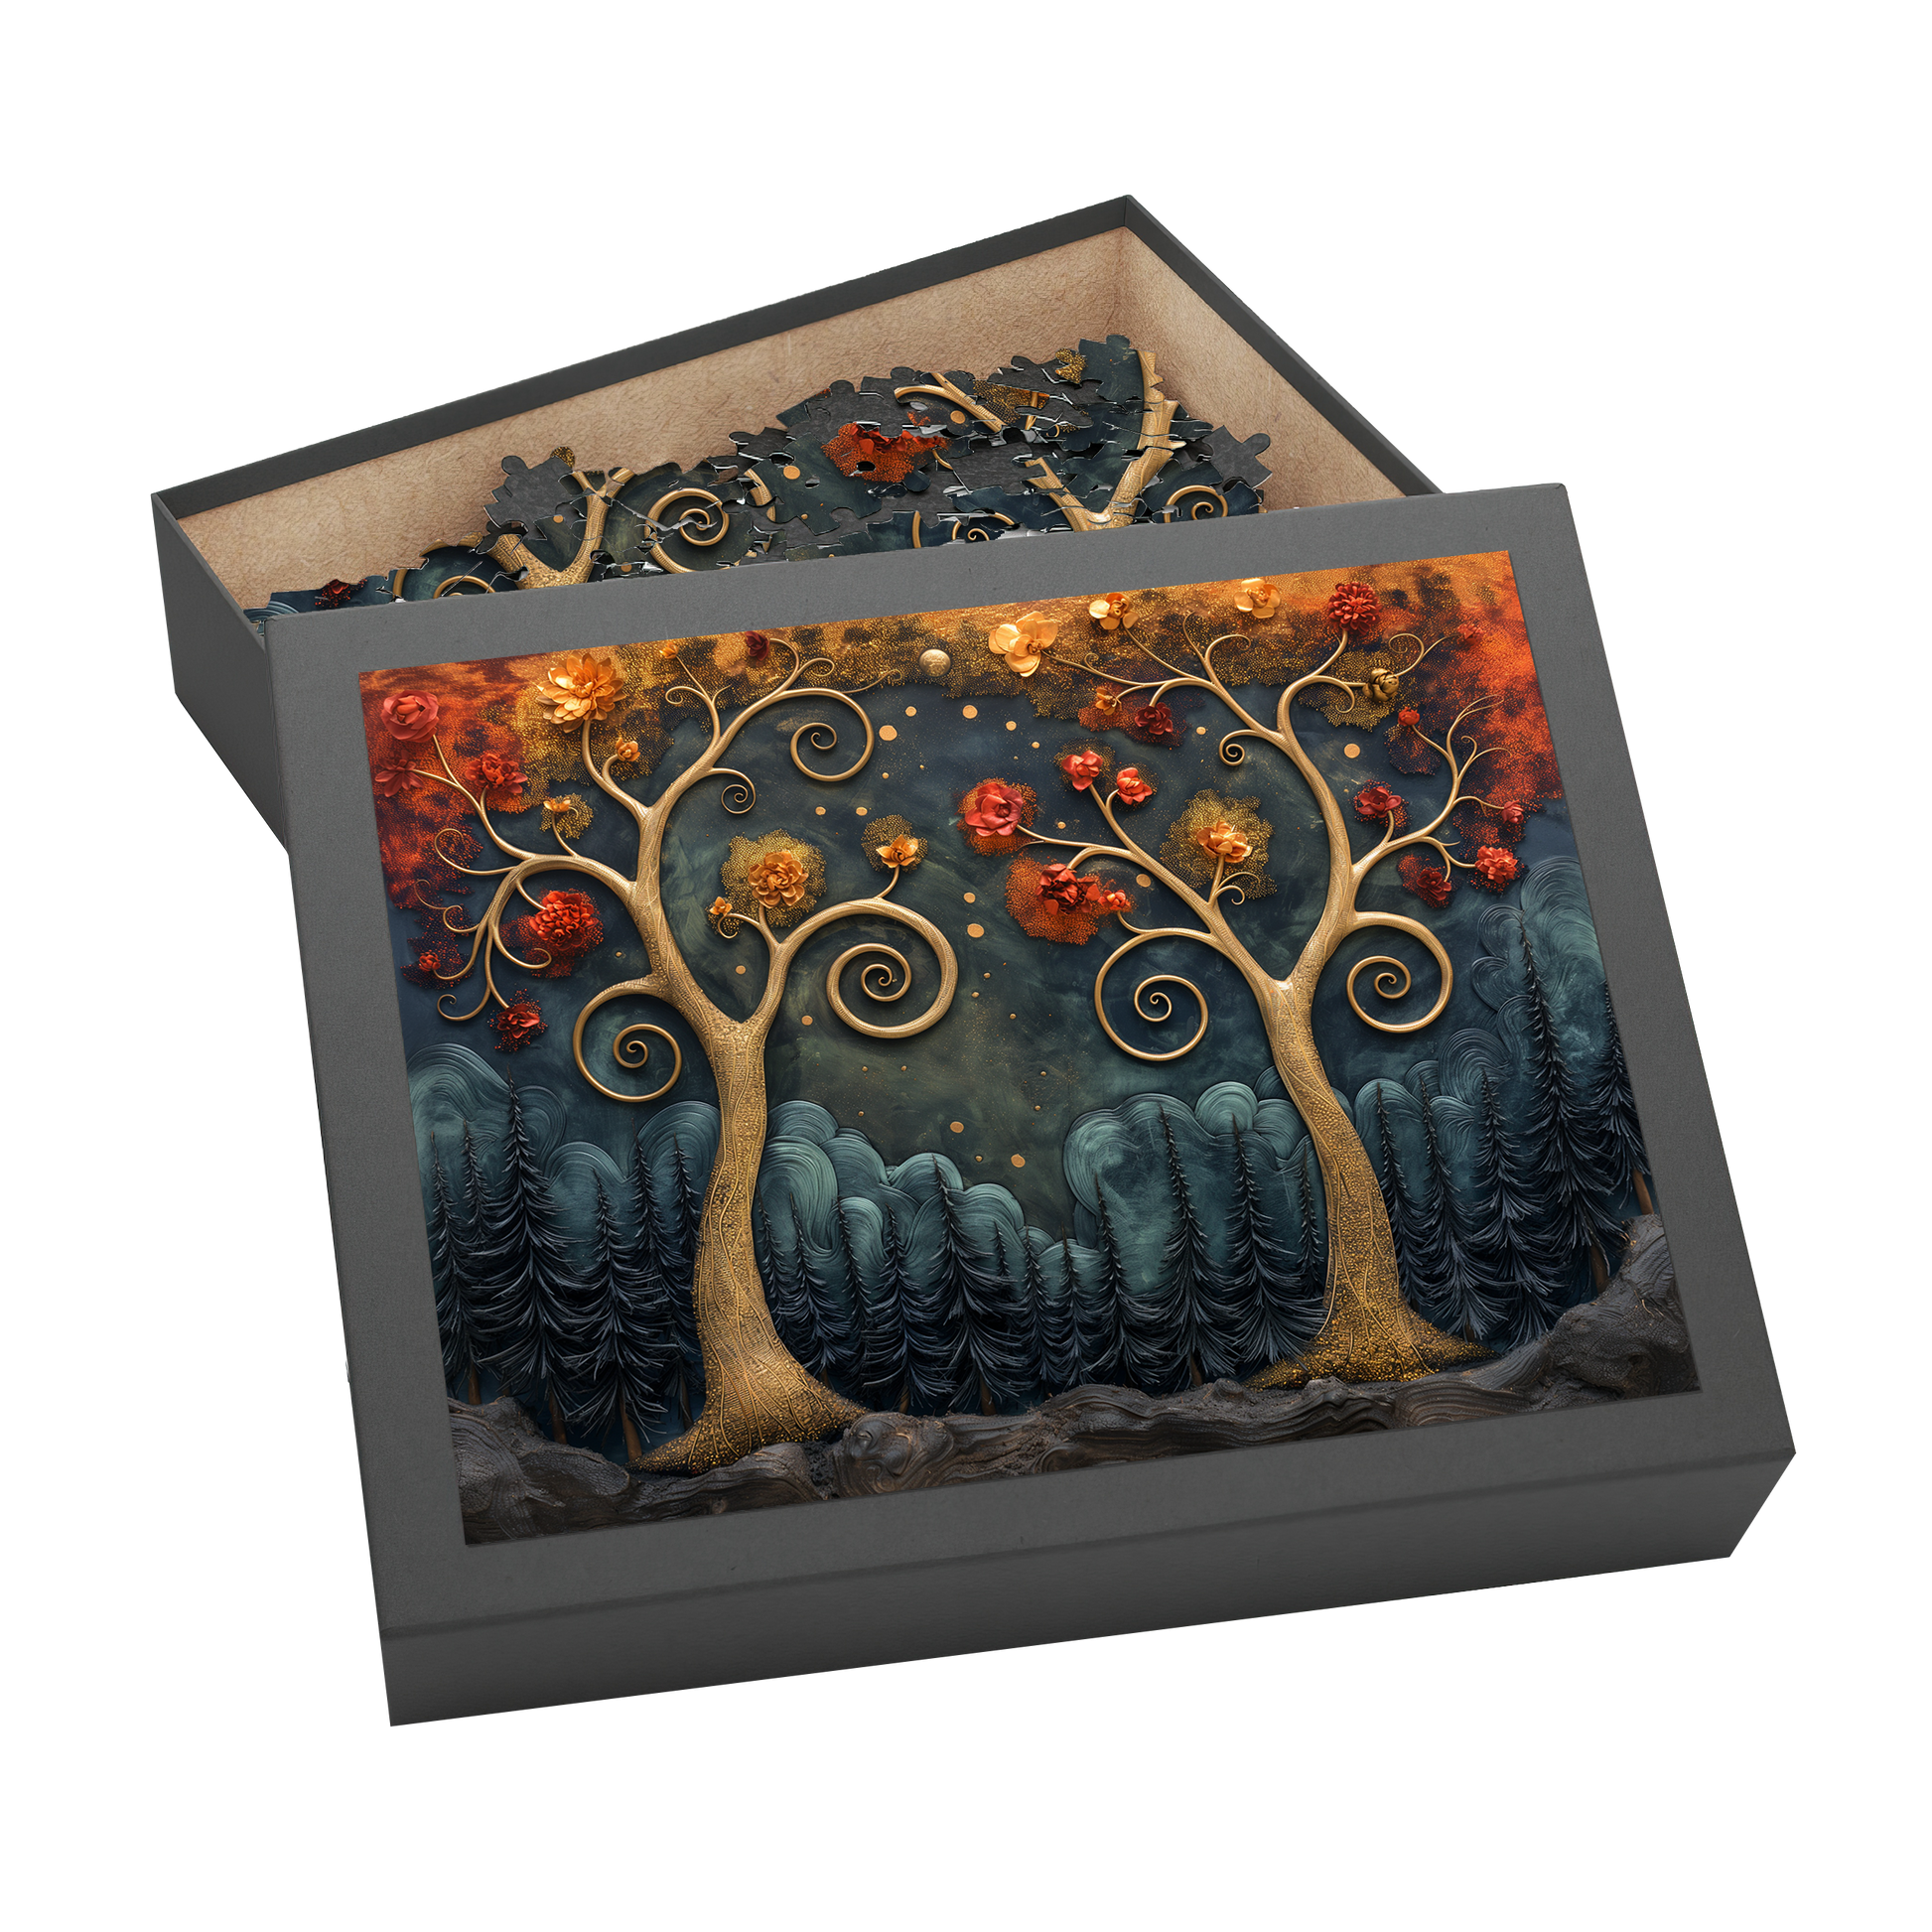 World Tree 06 - Premium Jigsaw Puzzle, Ornate, Fantasy - Multiple Sizes Available